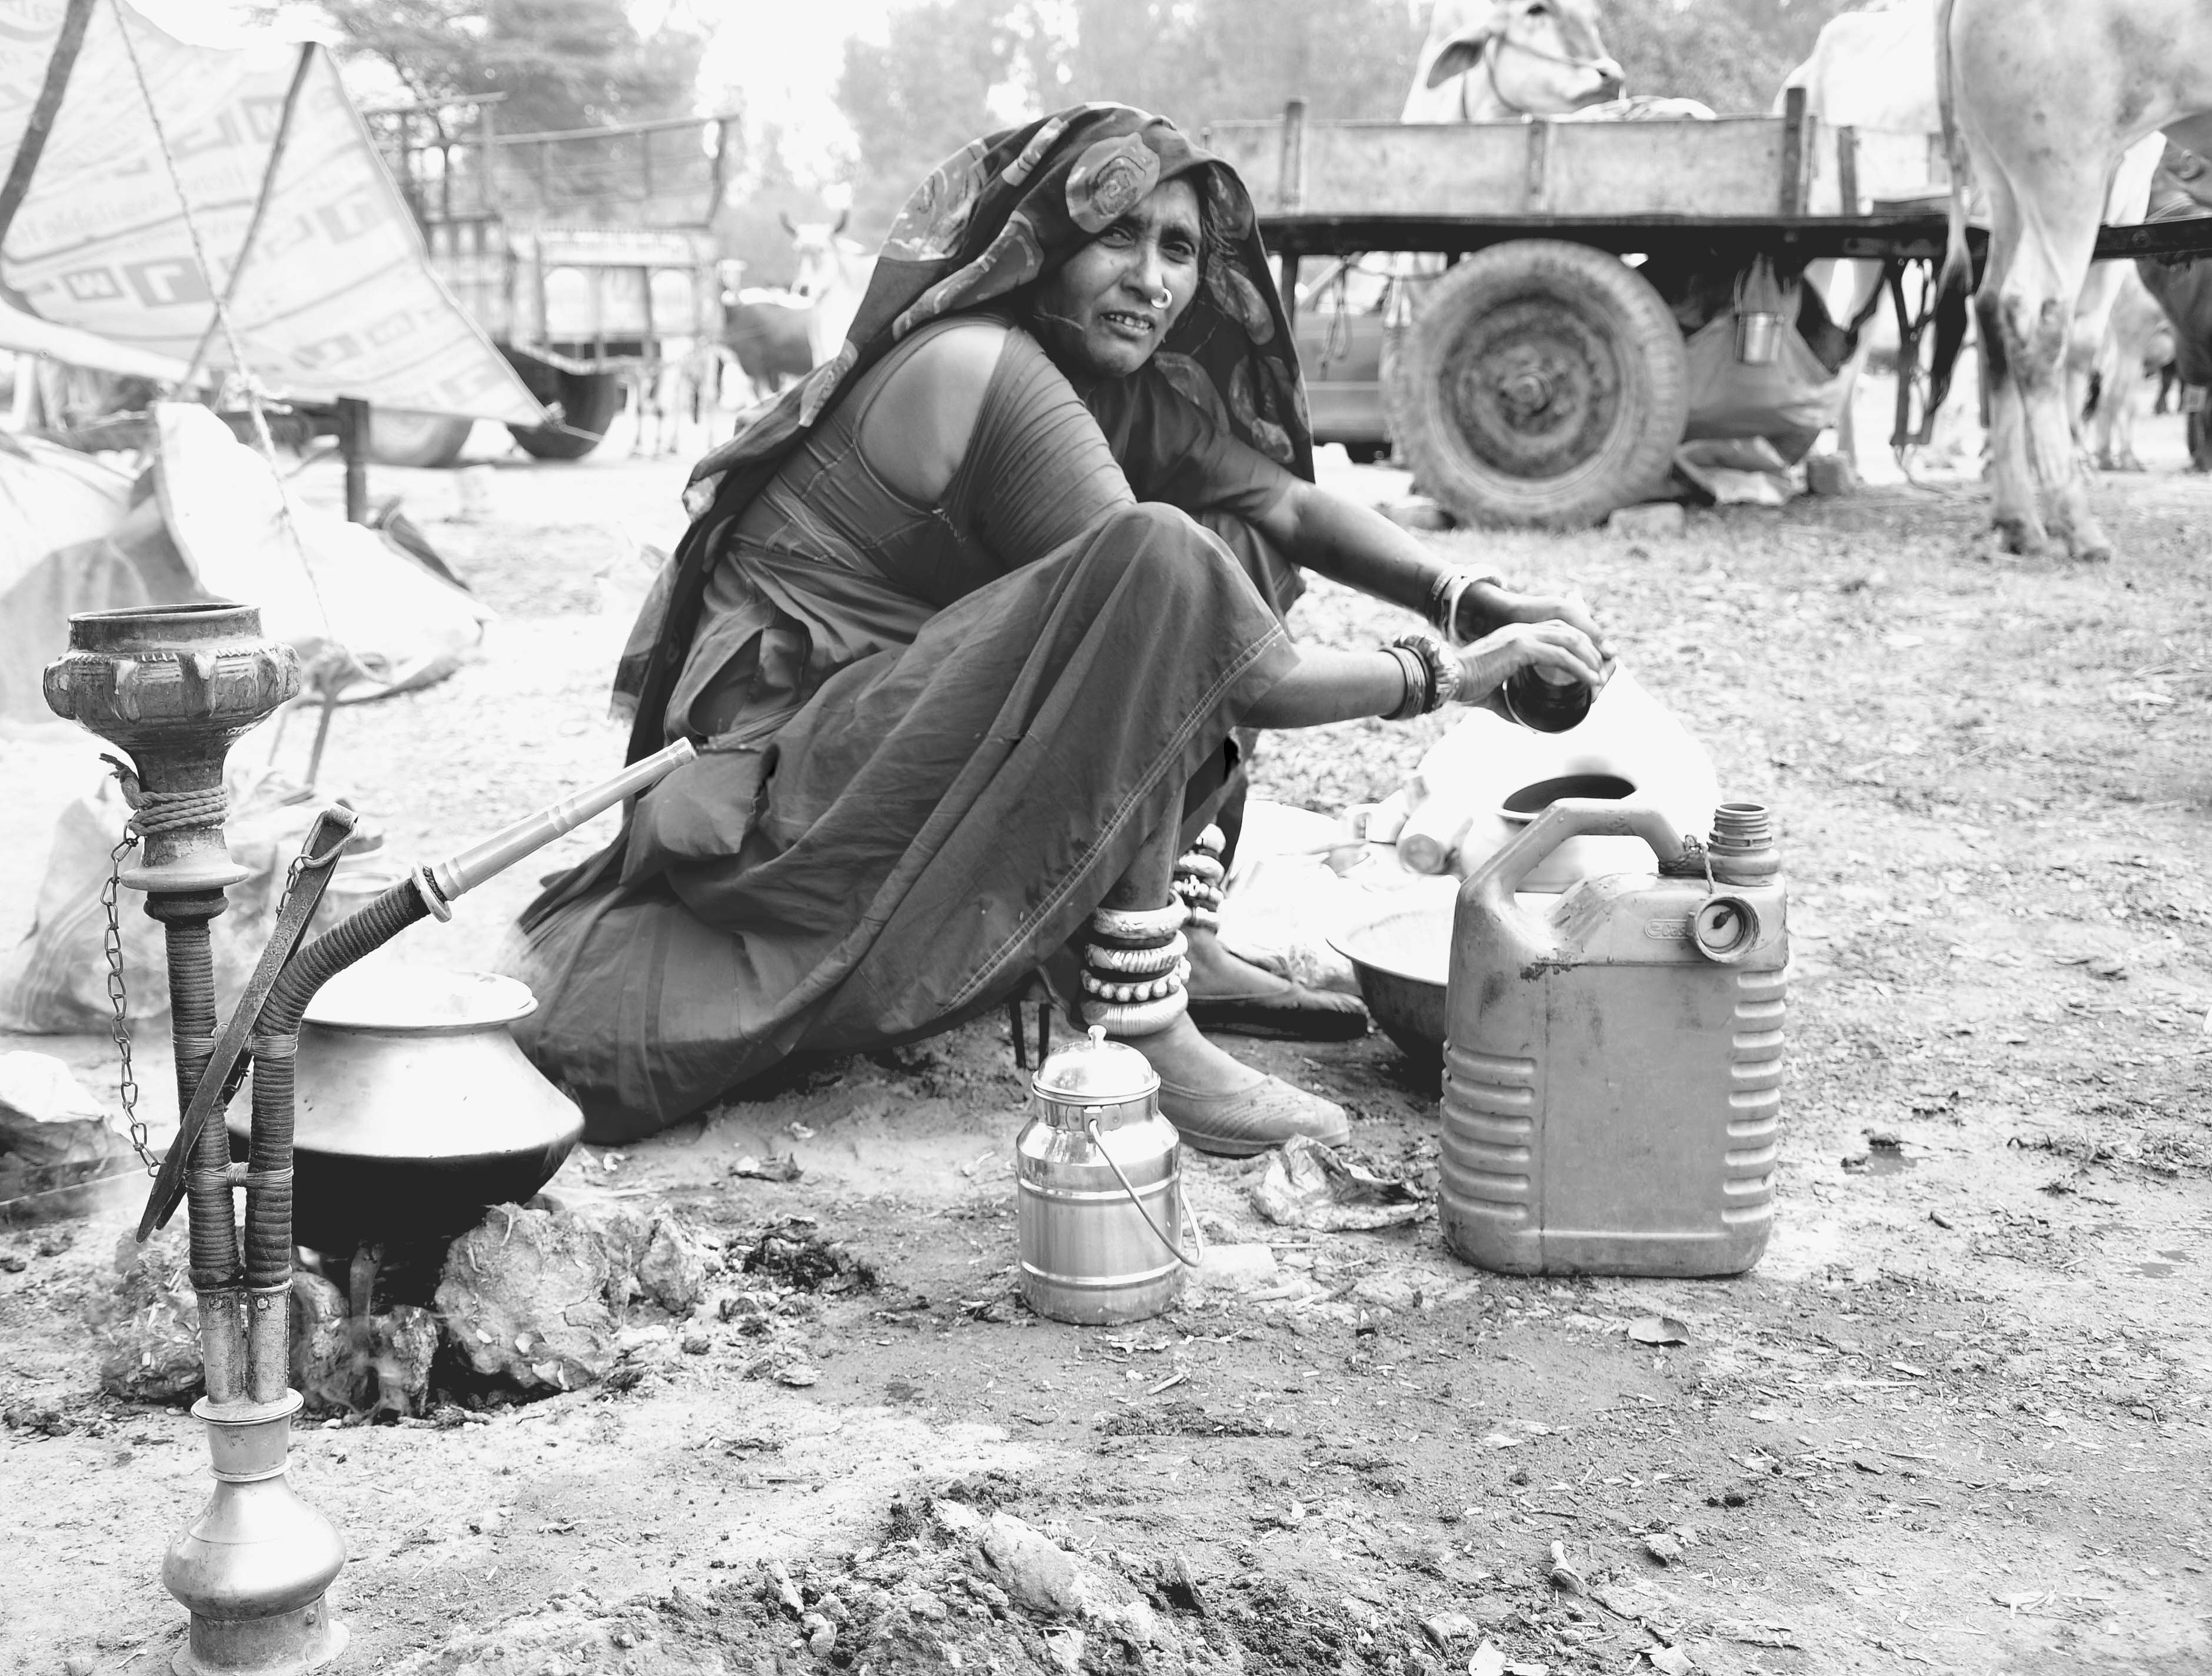 Village woman. Женщина с кувшином. Индианка с кувшином. Индия женщина Индия с кувшином воды. Девушка с кувшином фото.